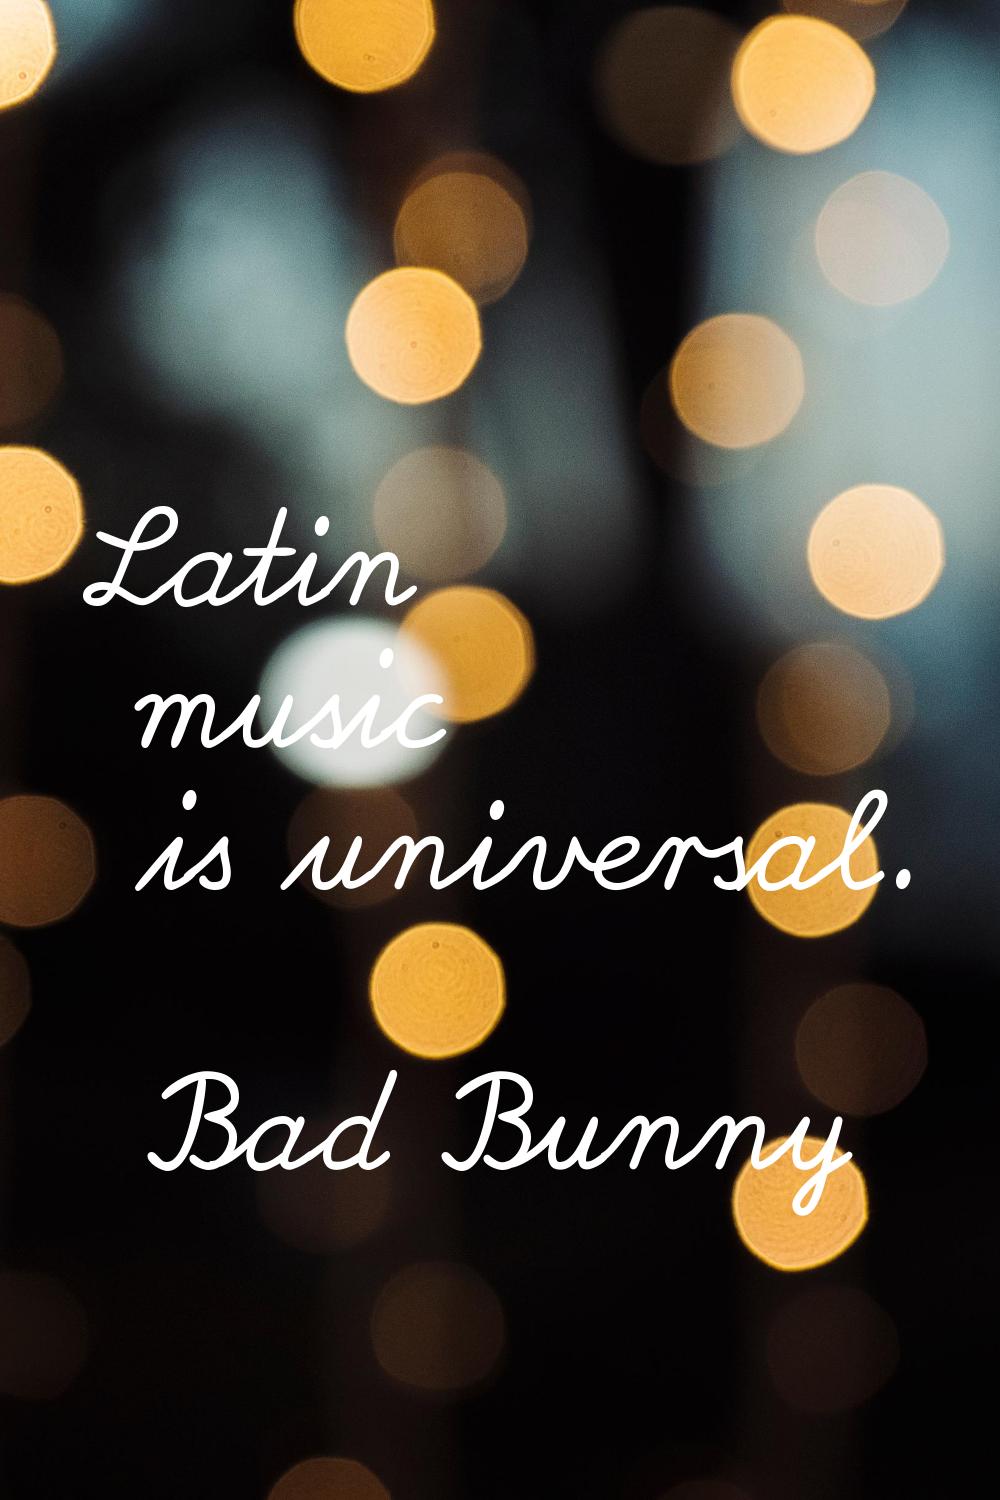 Latin music is universal.